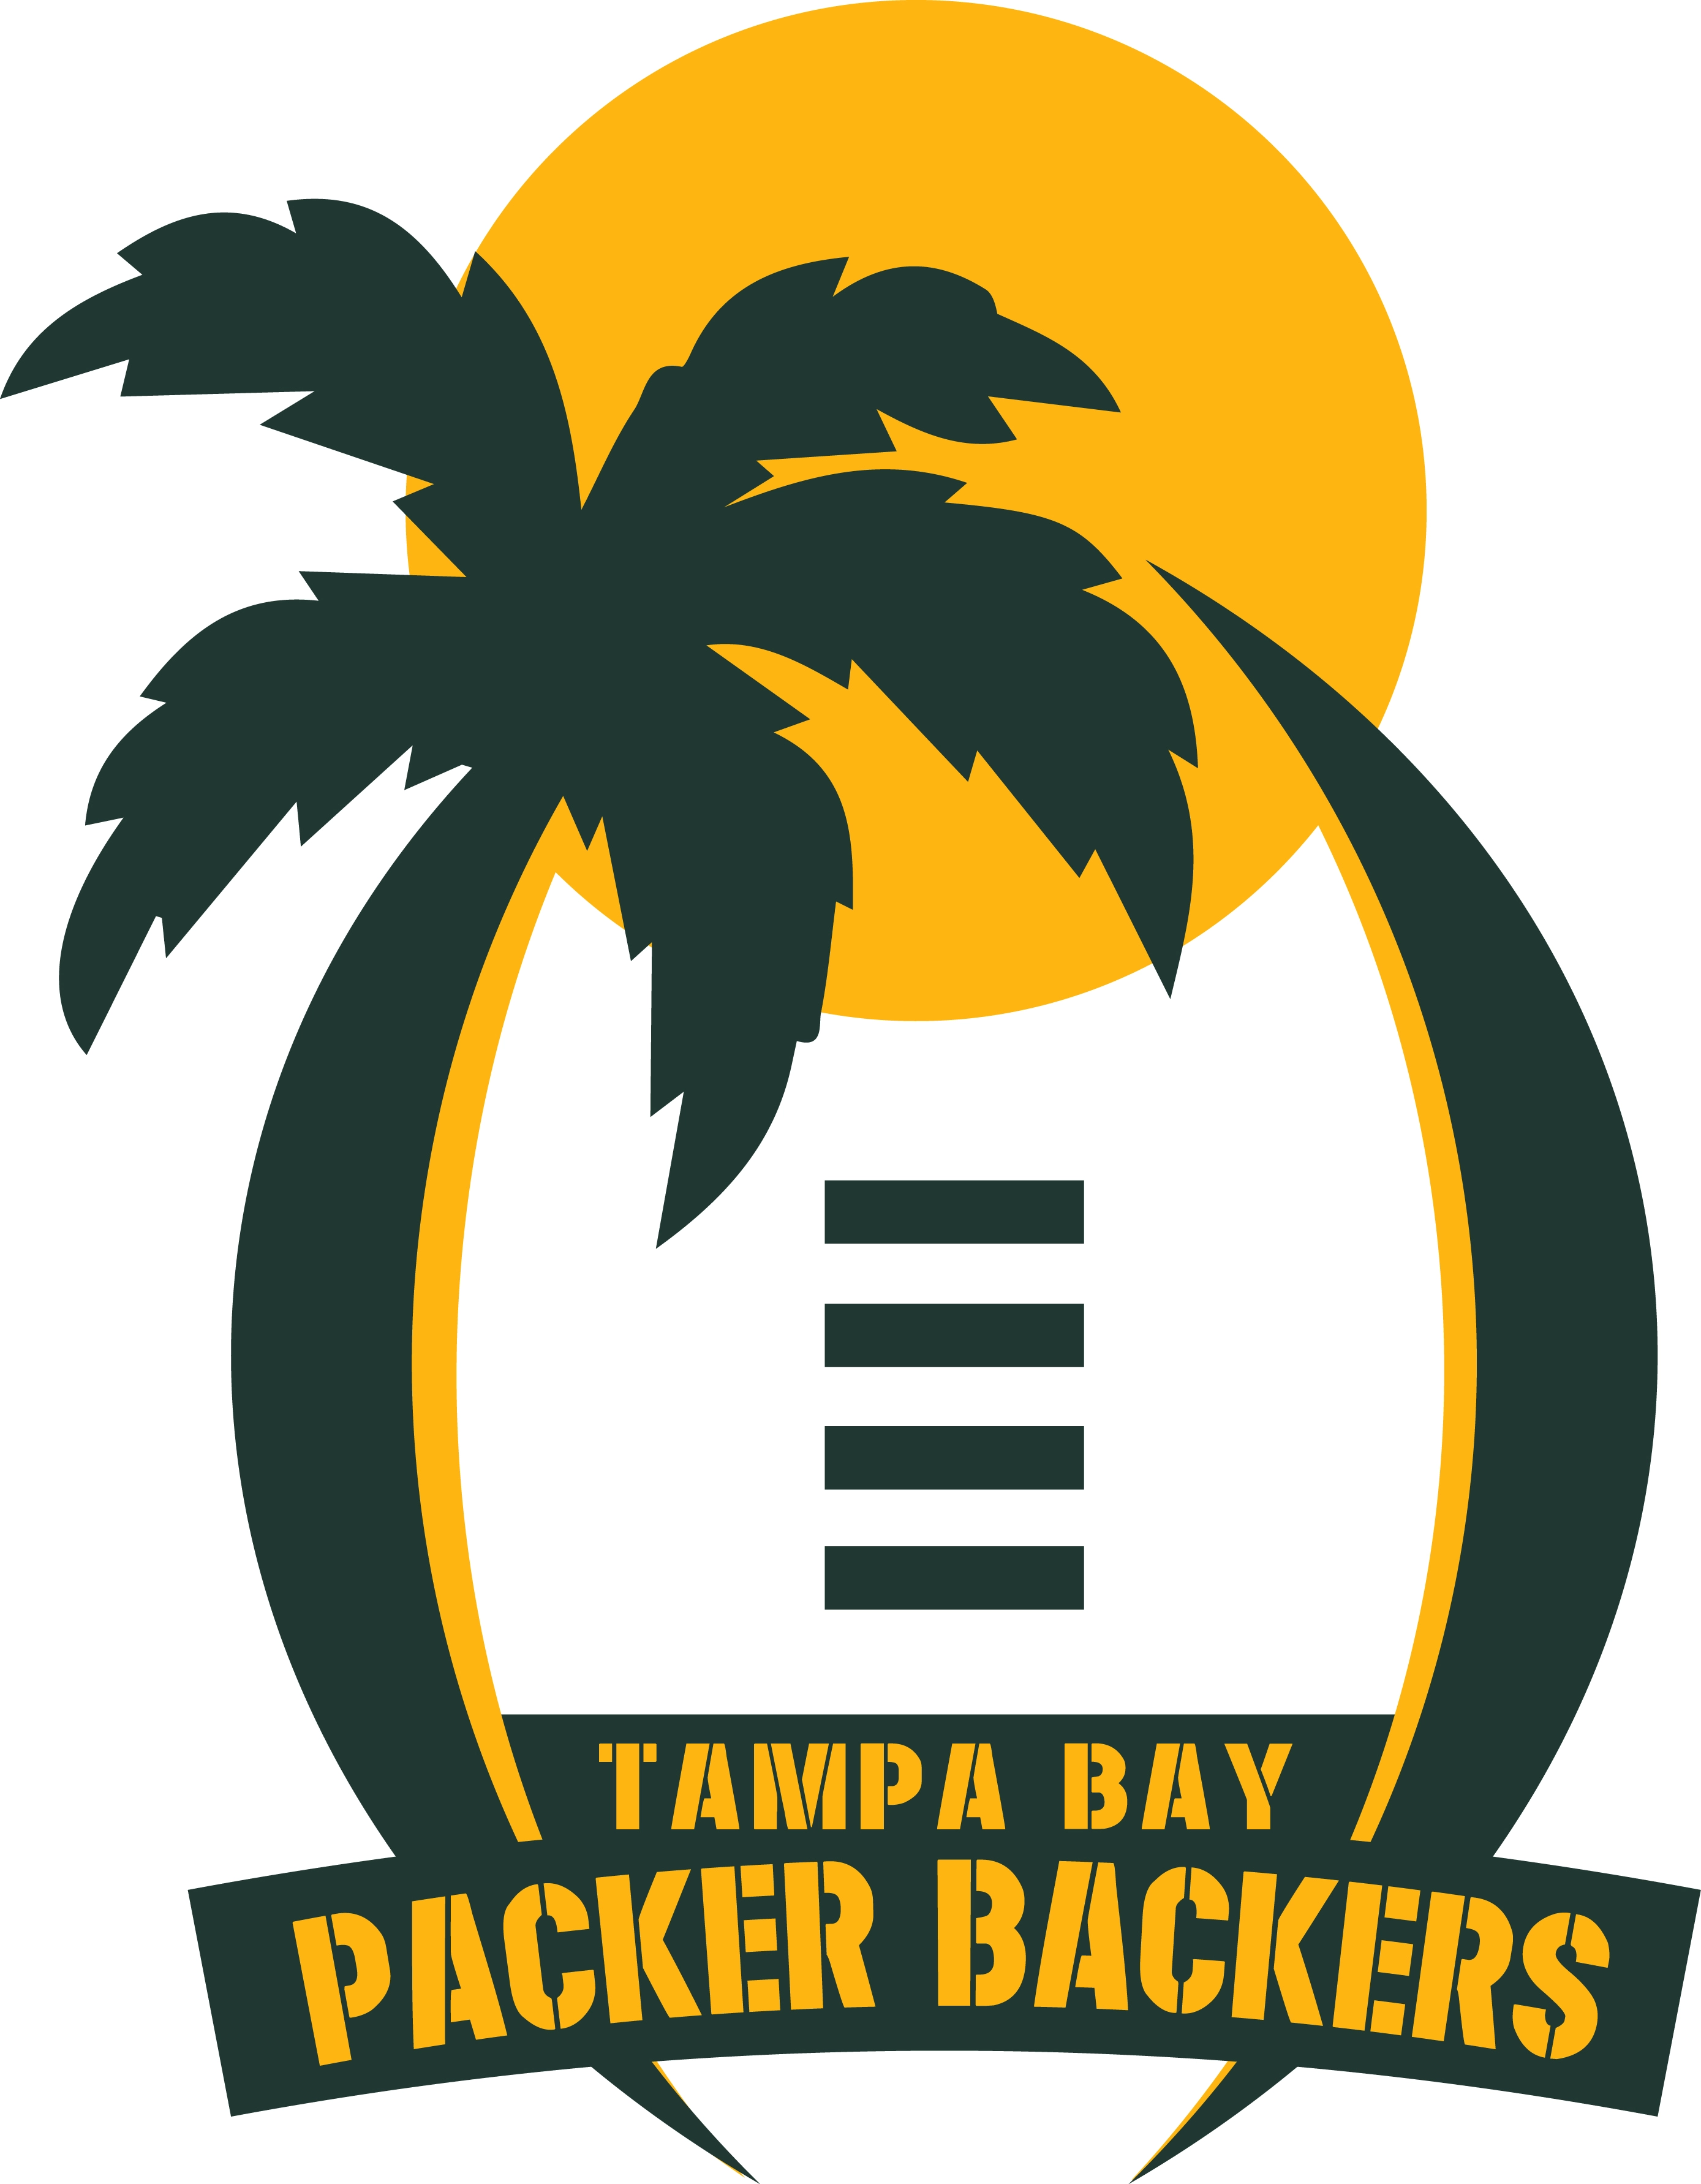 tampa bay packer backers logo